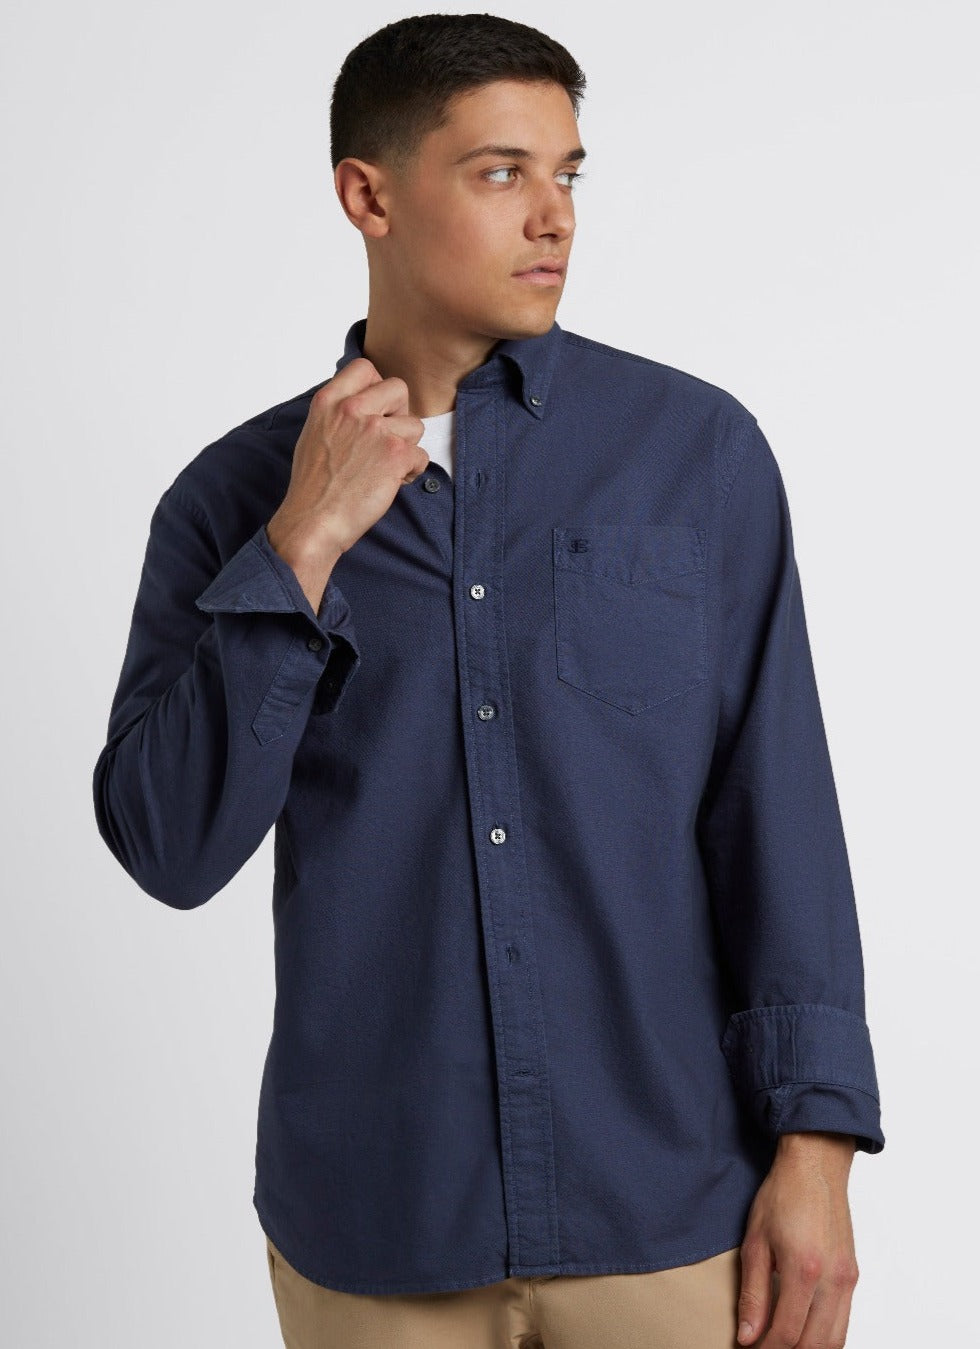 Beatnik Oxford Garment Dye Shirt - Indigo - Ben Sherman